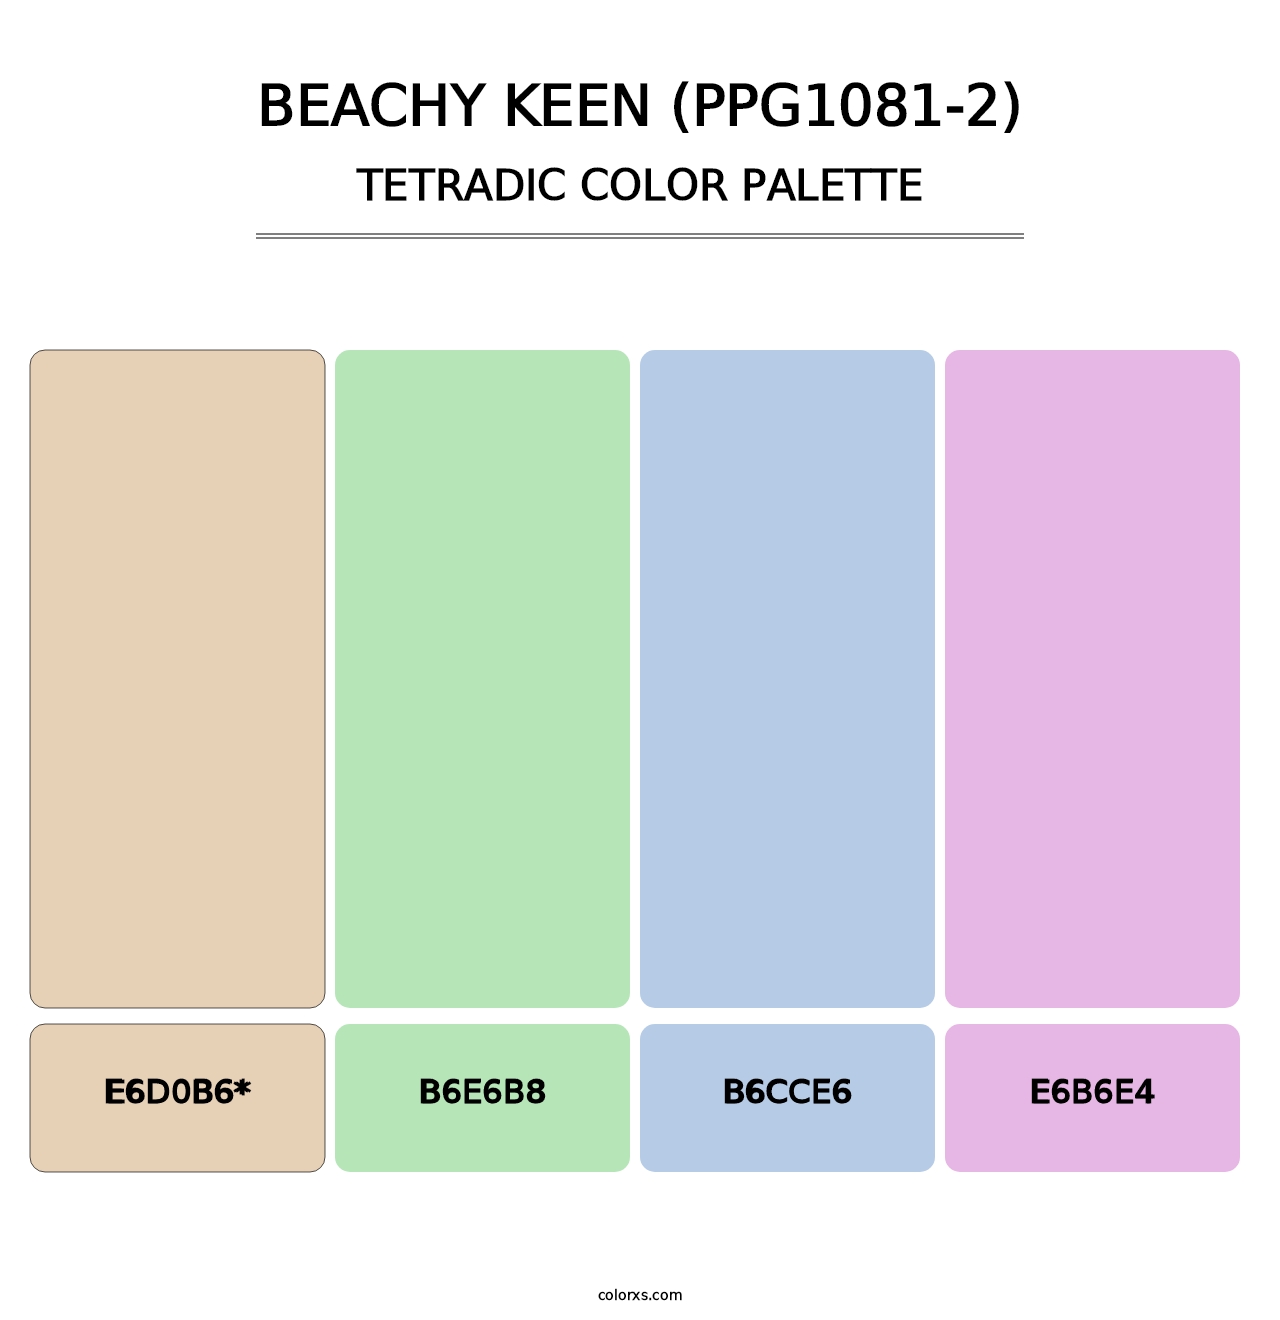 Beachy Keen (PPG1081-2) - Tetradic Color Palette